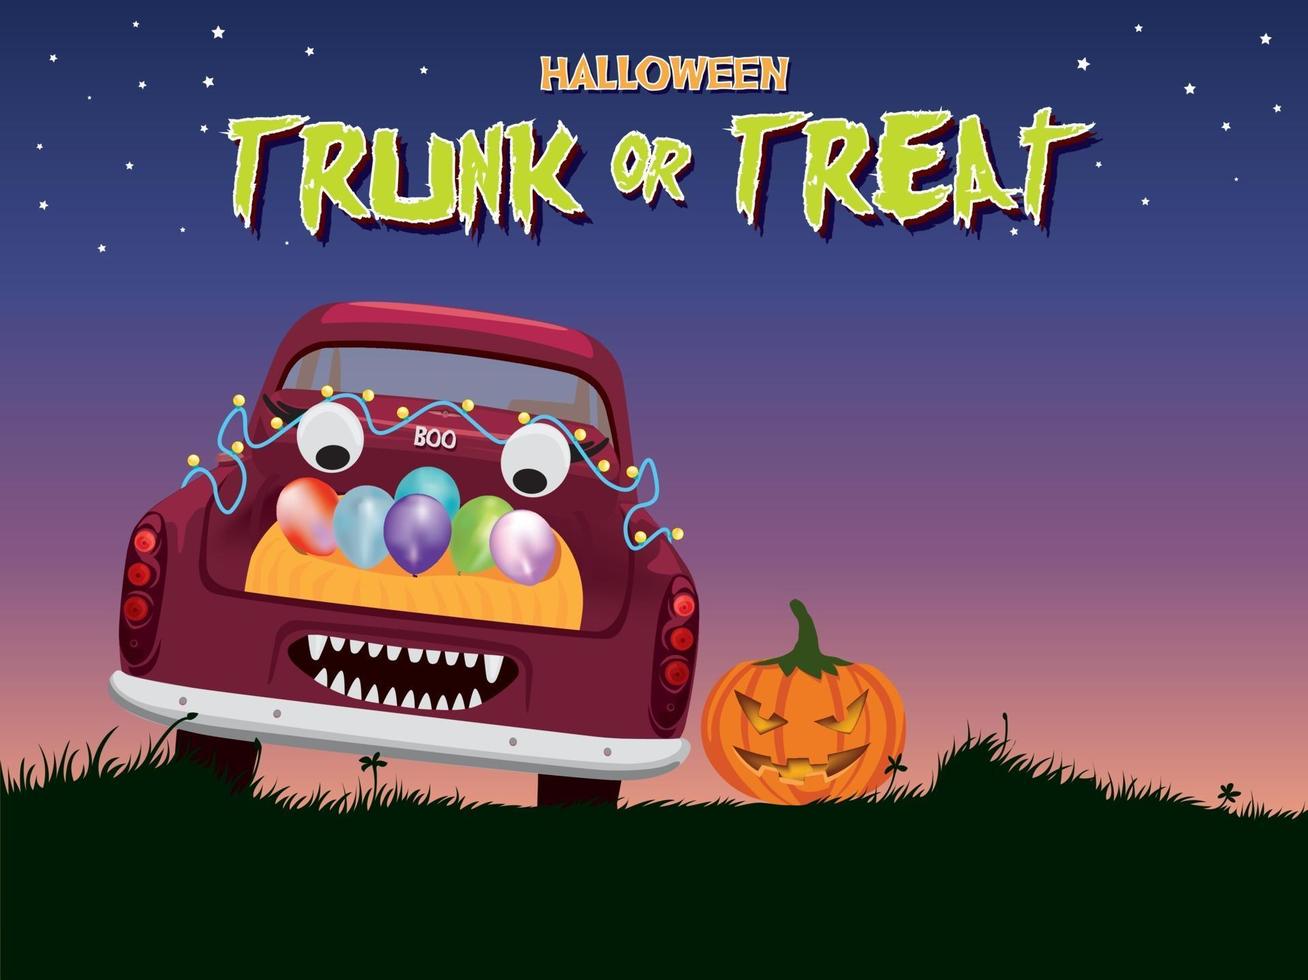 halloween-trunk-or-treat-on-illustration-graphic-free-vector.jpg